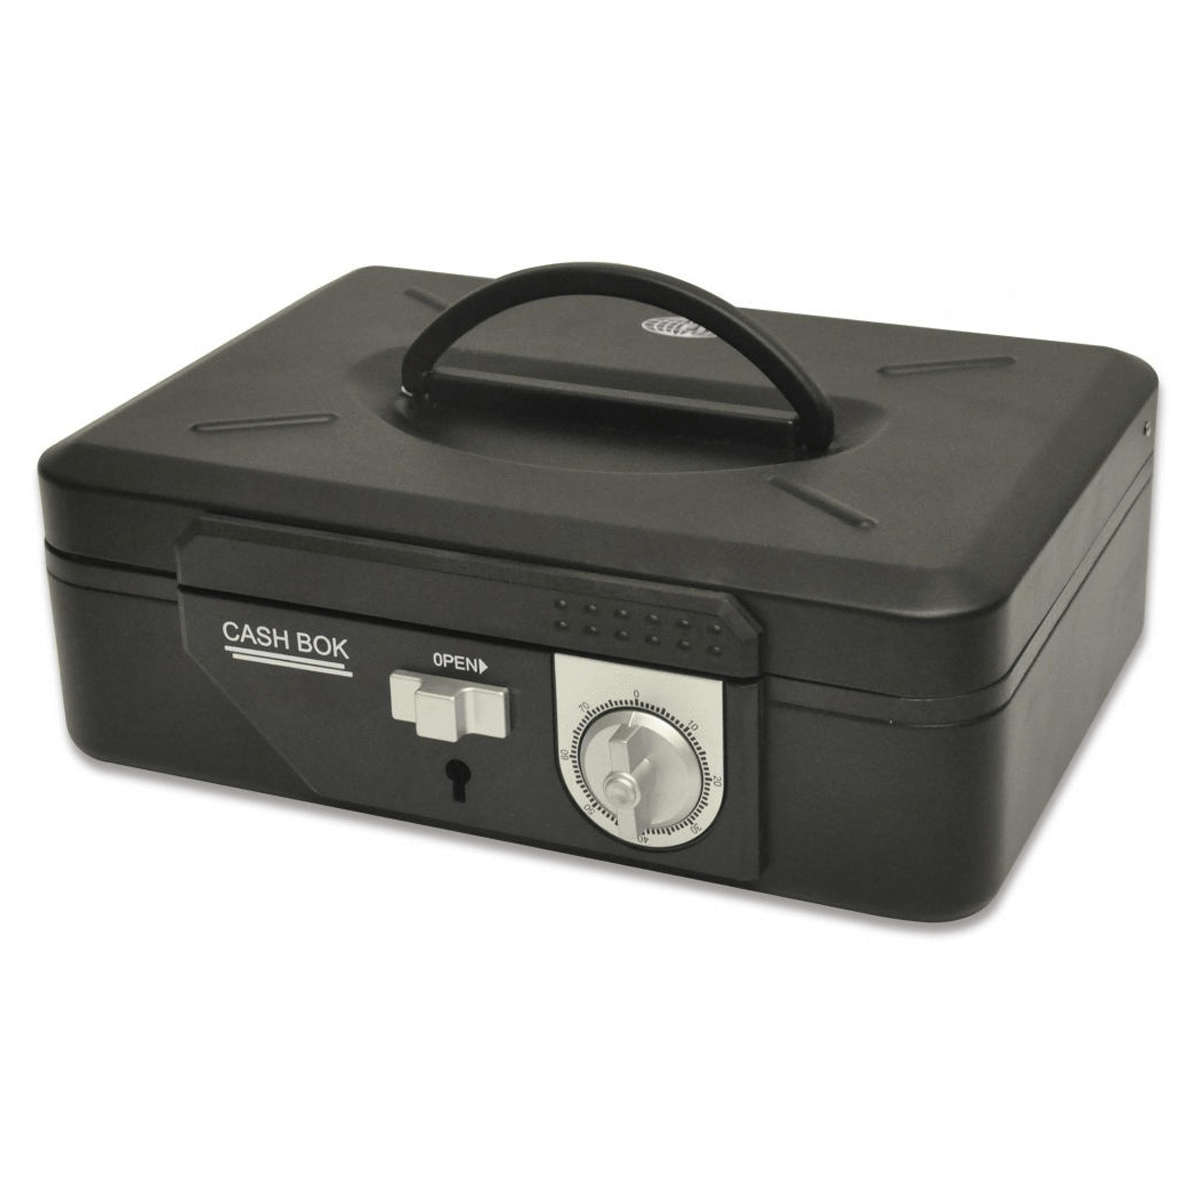 Cash Box Steel Black Color With Number / Key lock